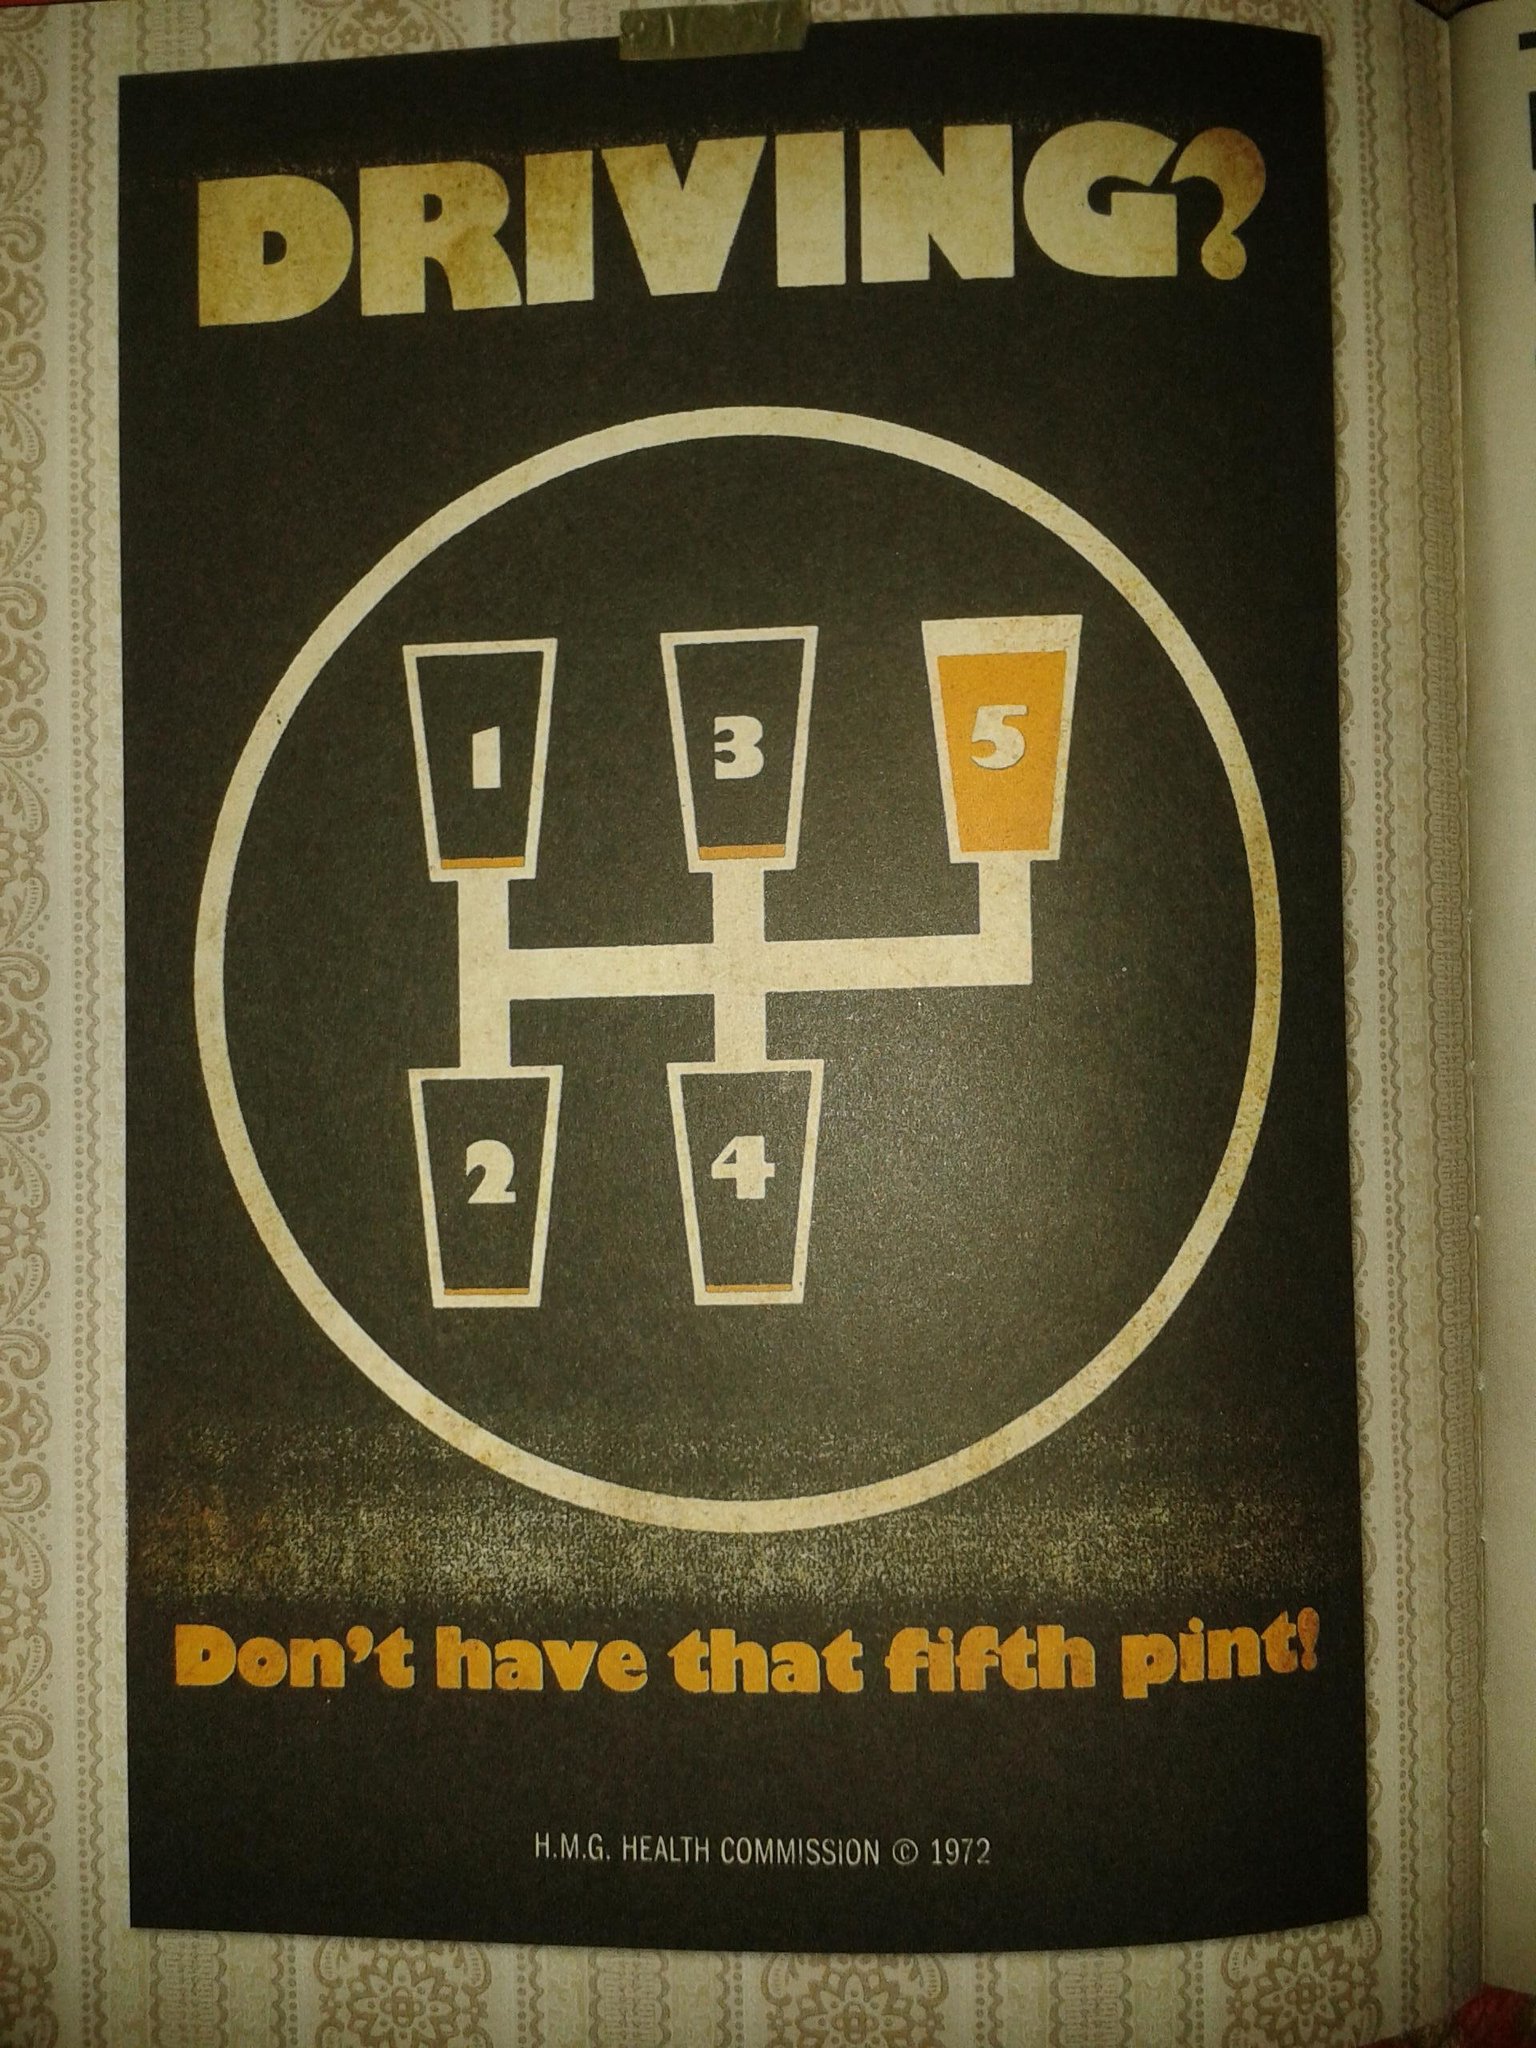 Robert Barrett on Twitter: "Irish anti-drink driving ad, 1972. "Don't have  that fifth pint!" https://t.co/YDtT8yCIHn" / Twitter